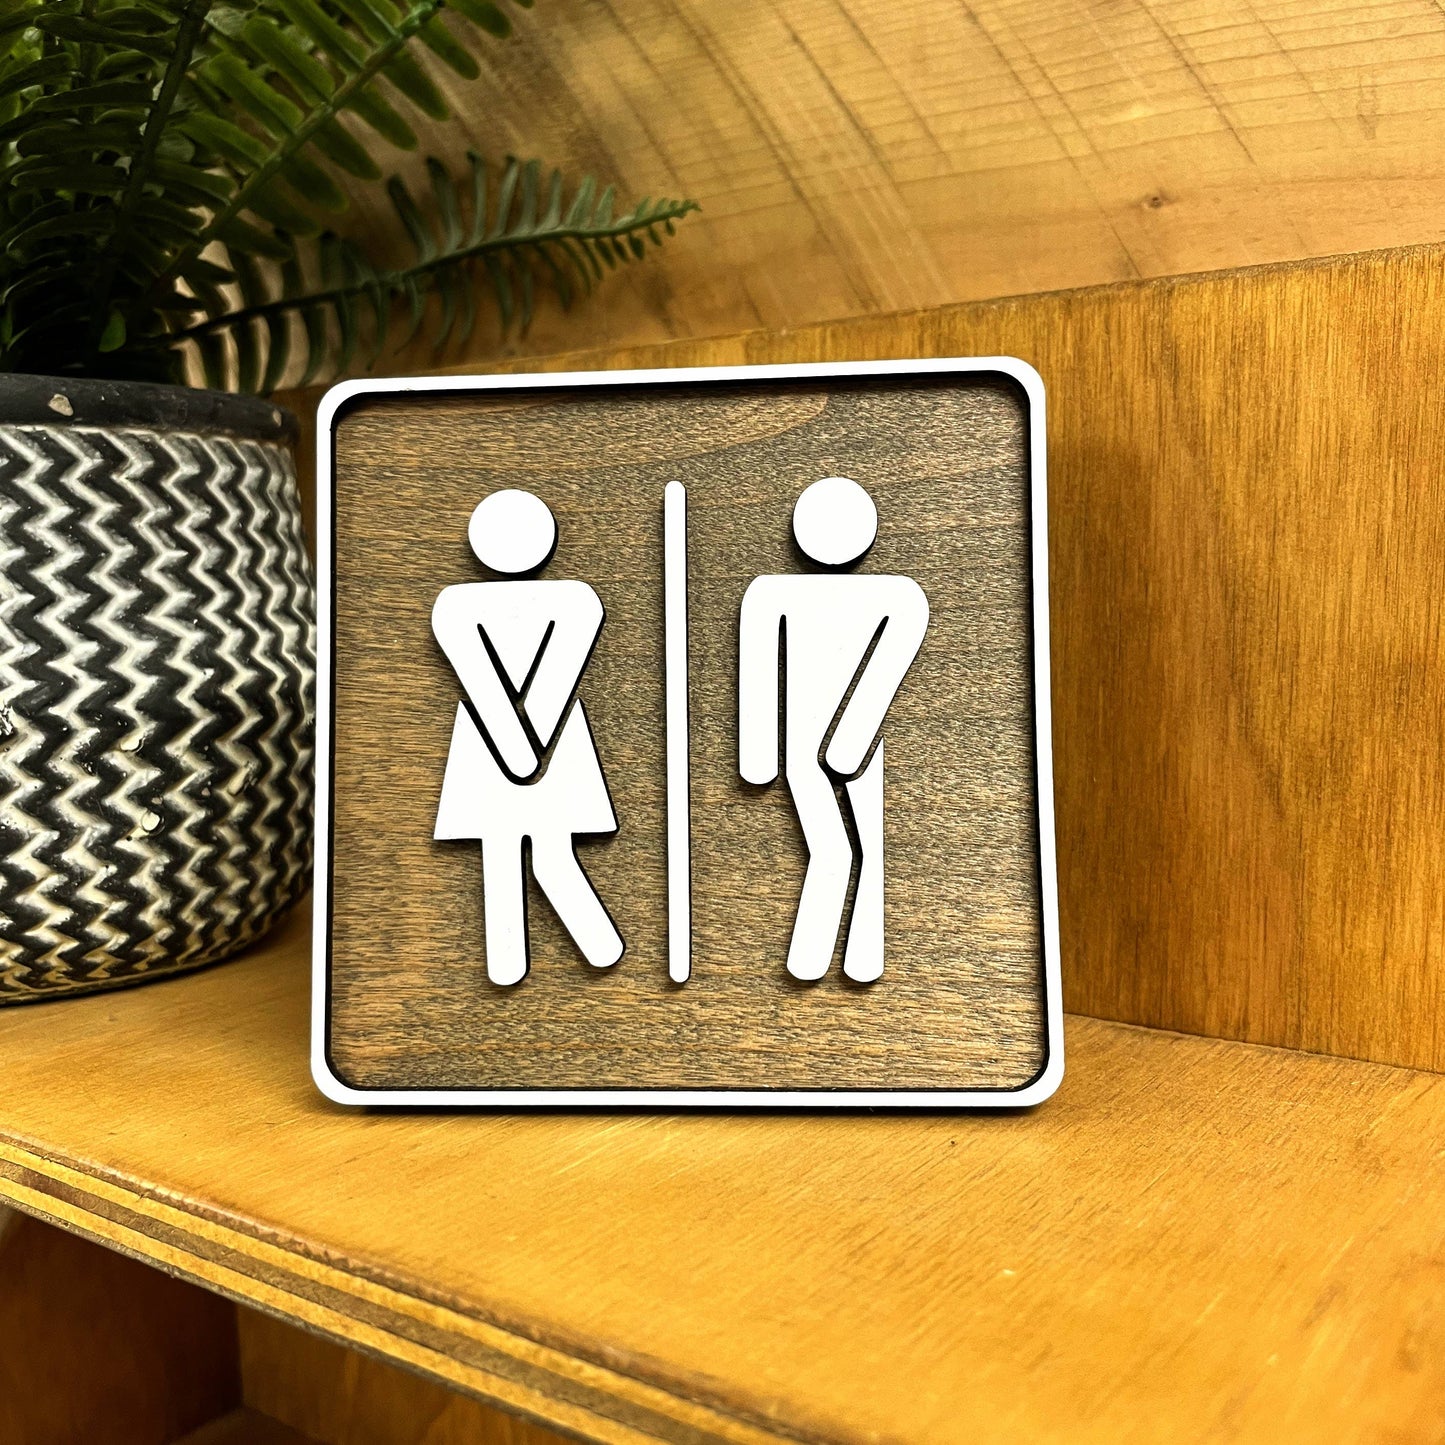 Dusty Square Designs - Funny Unisex Bathroom Shelf Decor